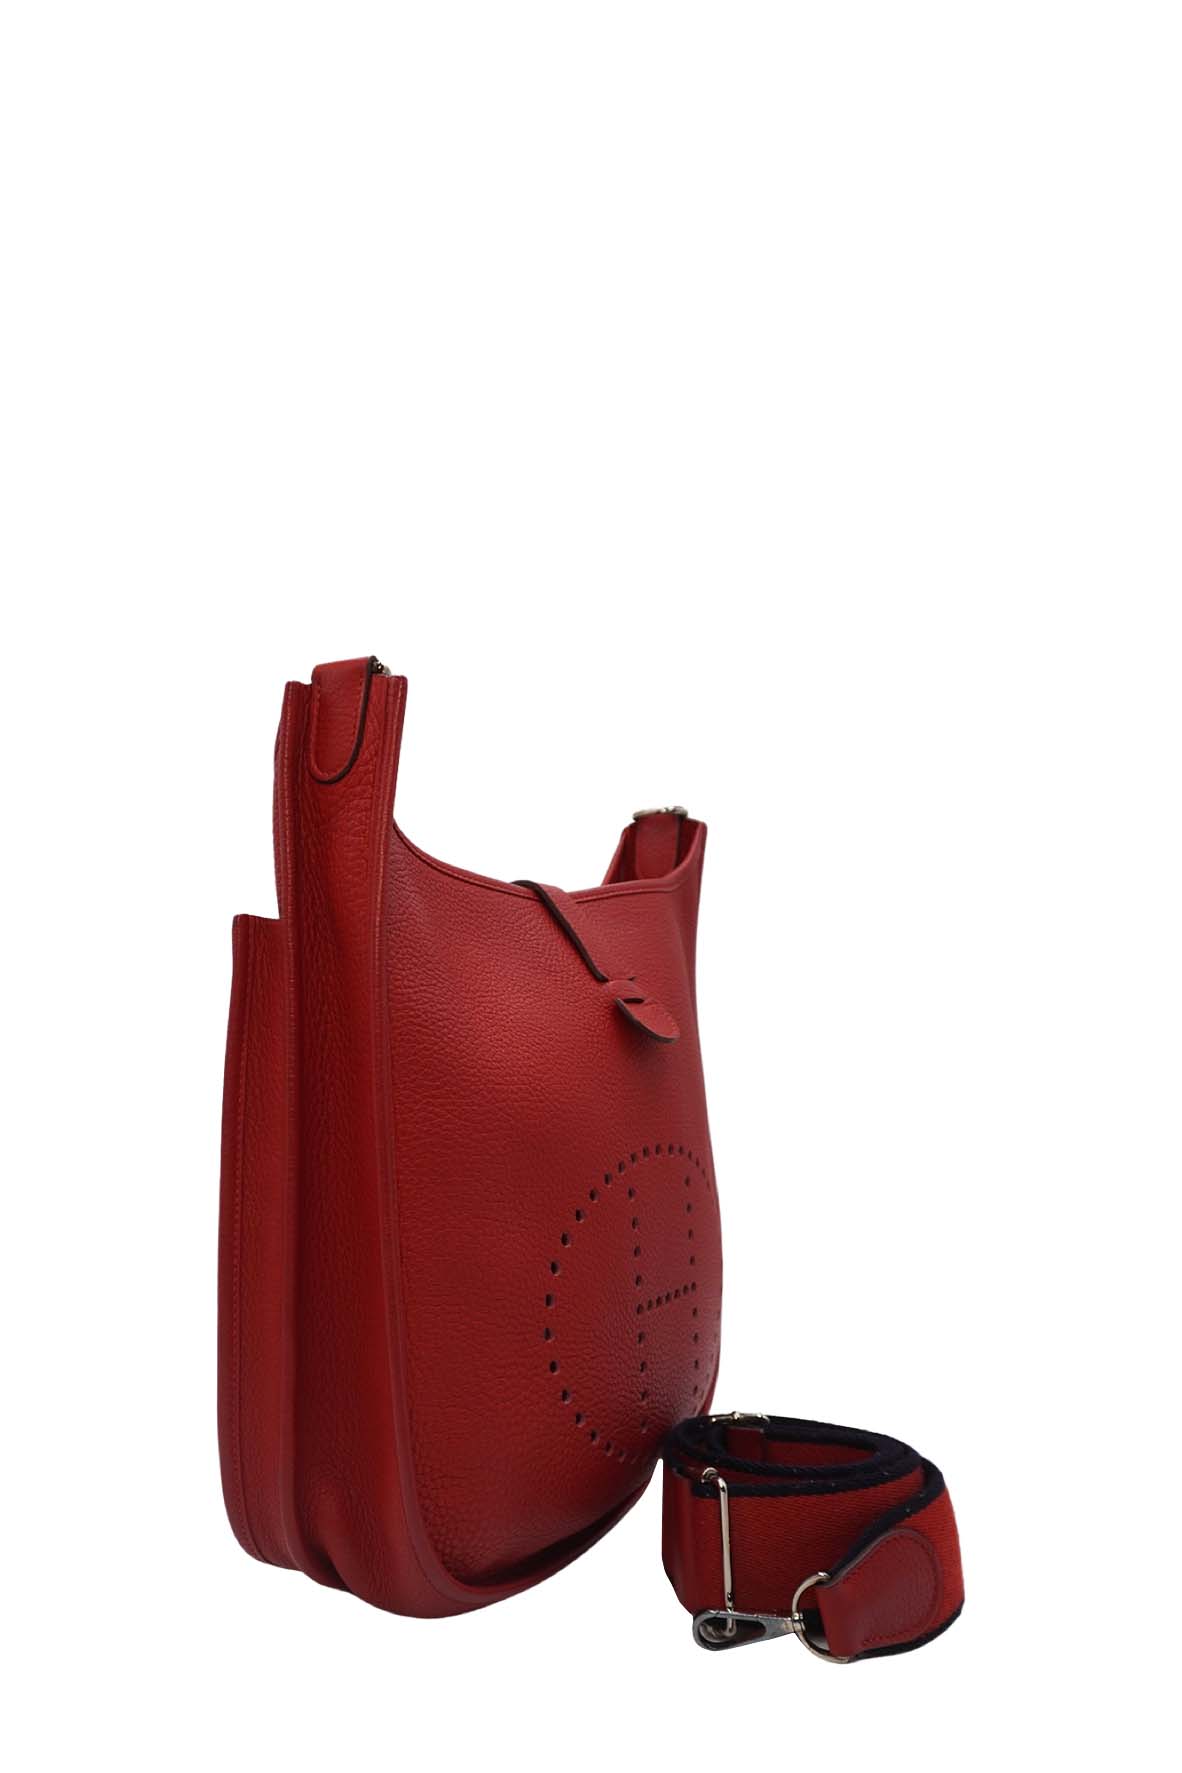 purse straps for Hermes Evelyne III 16 29 33 MM PM GM strap for handbags  crossbody 3026Color 1-56cm: Handbags